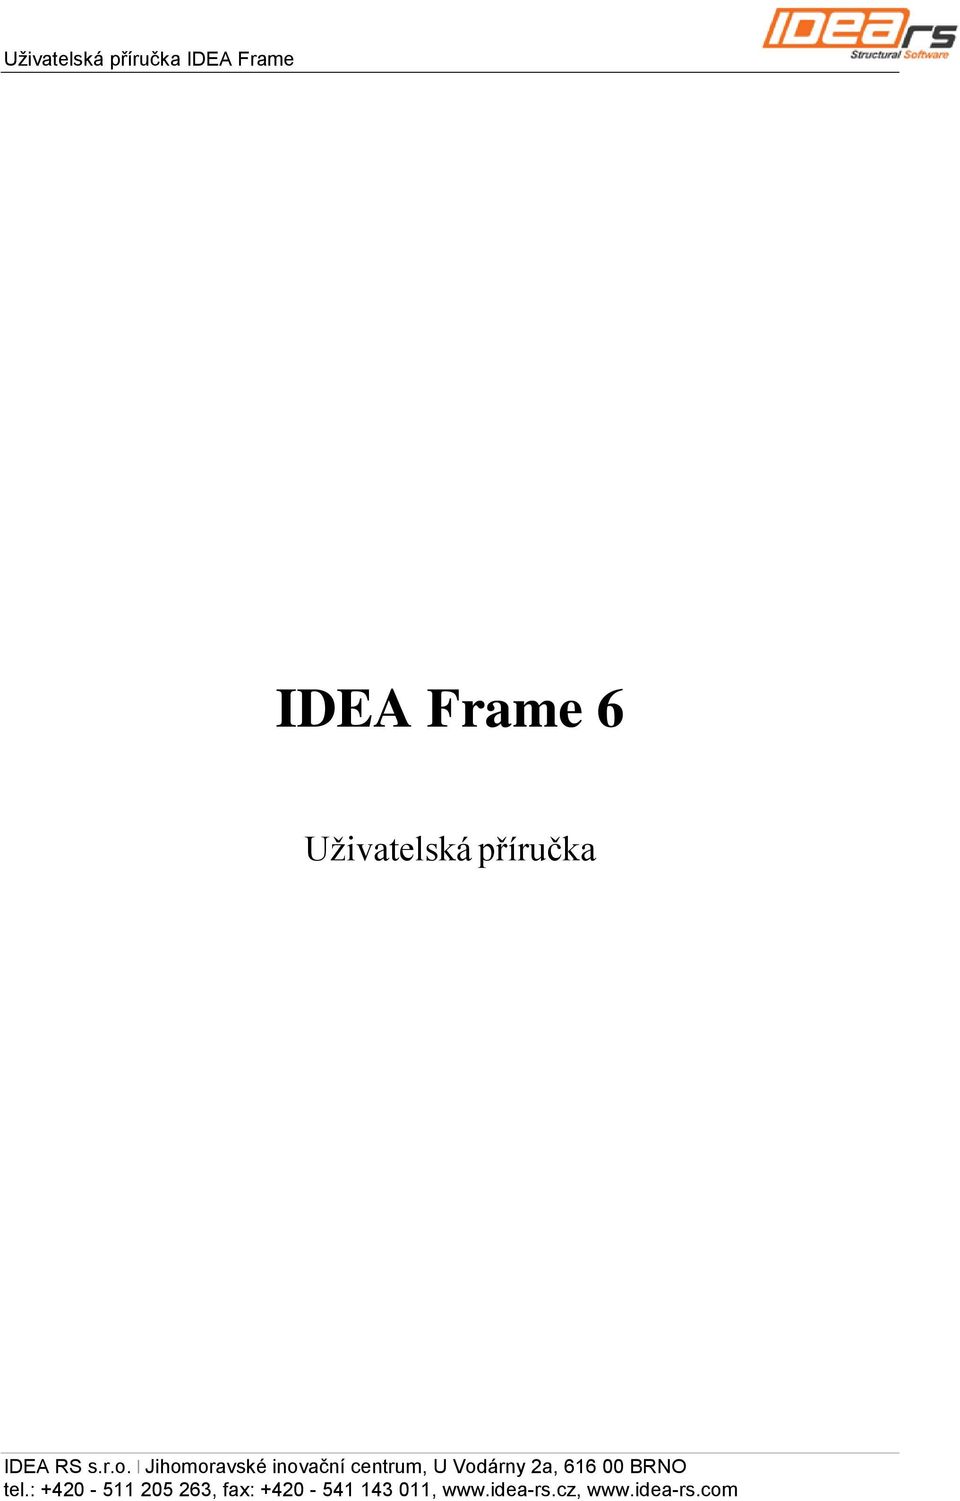 Frame IDEA Frame